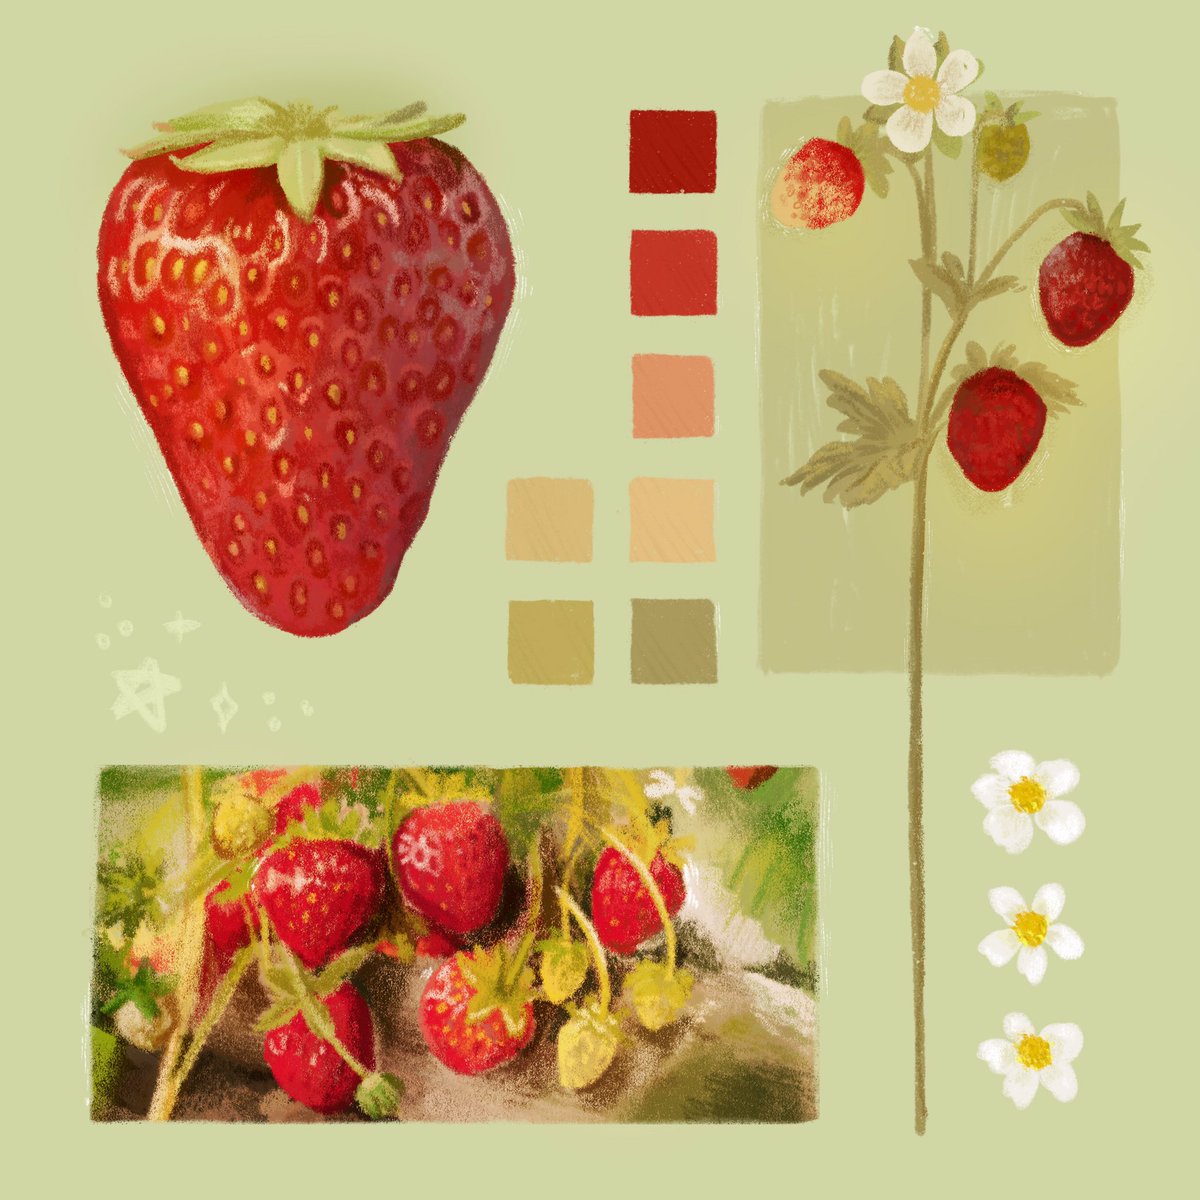 Fancy Study drawing page of strawberries 🍓✨ 

#illustration #digitalart #studydrawing #sketch #realismdrawing #art #strawberry #strawberries